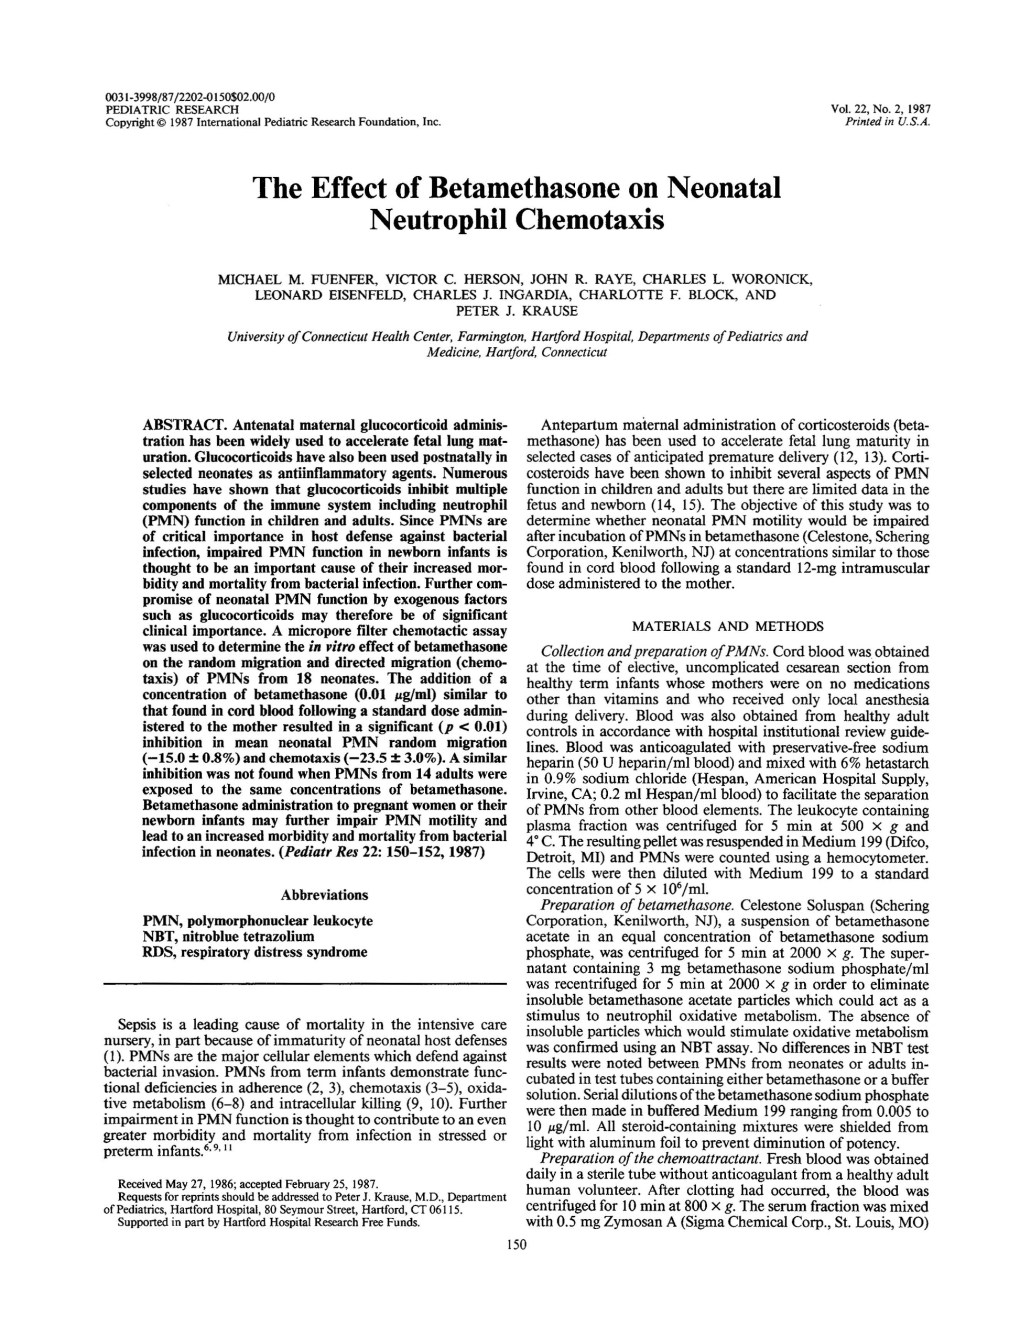 The Effect of Betamethasone on Neonatal Neutrophil Chemotaxis